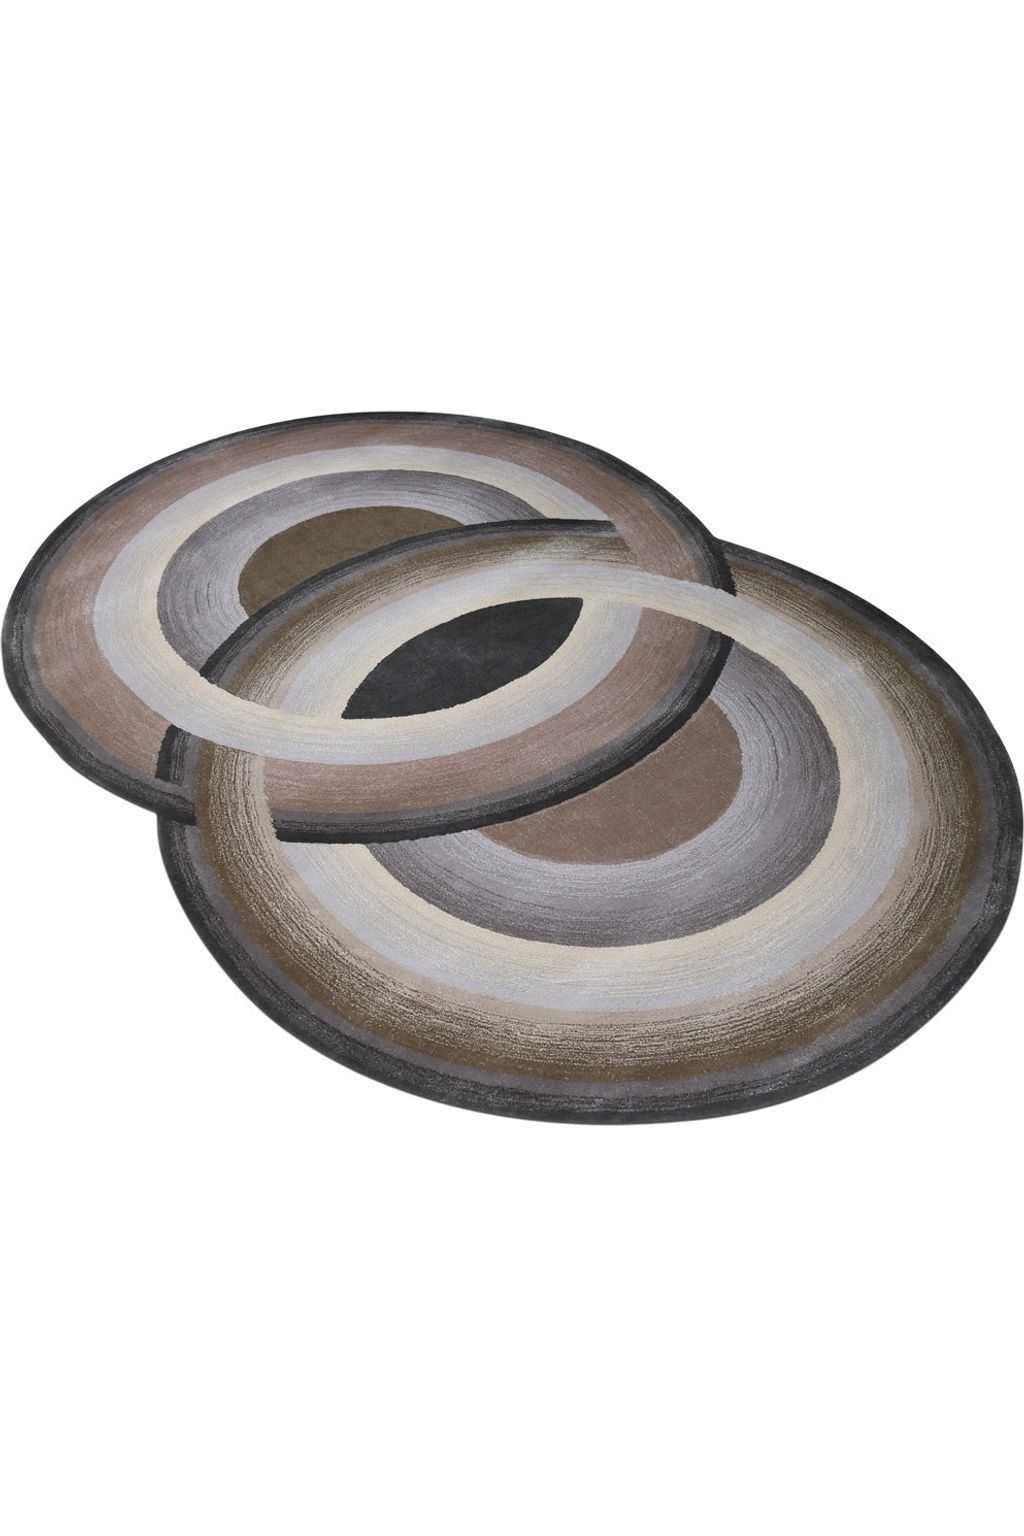 #Turkish_Carpets_Rugs# #Modern_Carpets# #Abrash_Carpets#Circle 002-Y